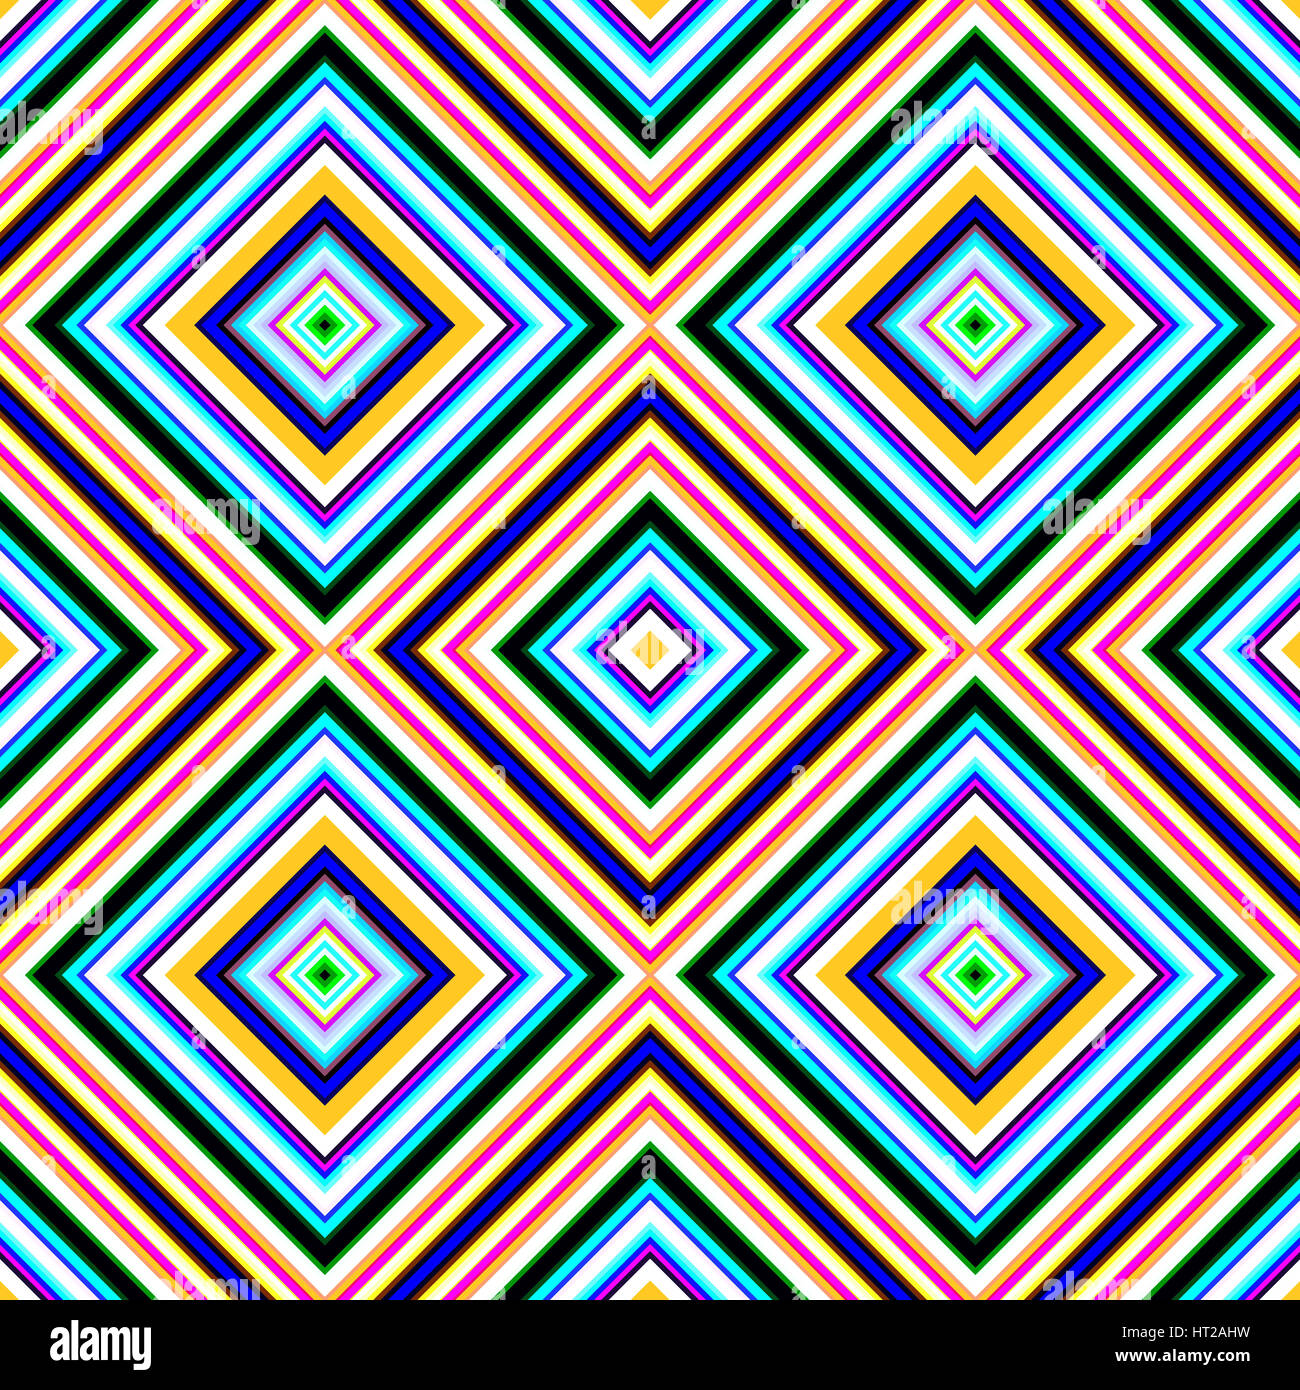 Multicoloured vibrant diamond shape tiles seamless illustration. Stock Photo